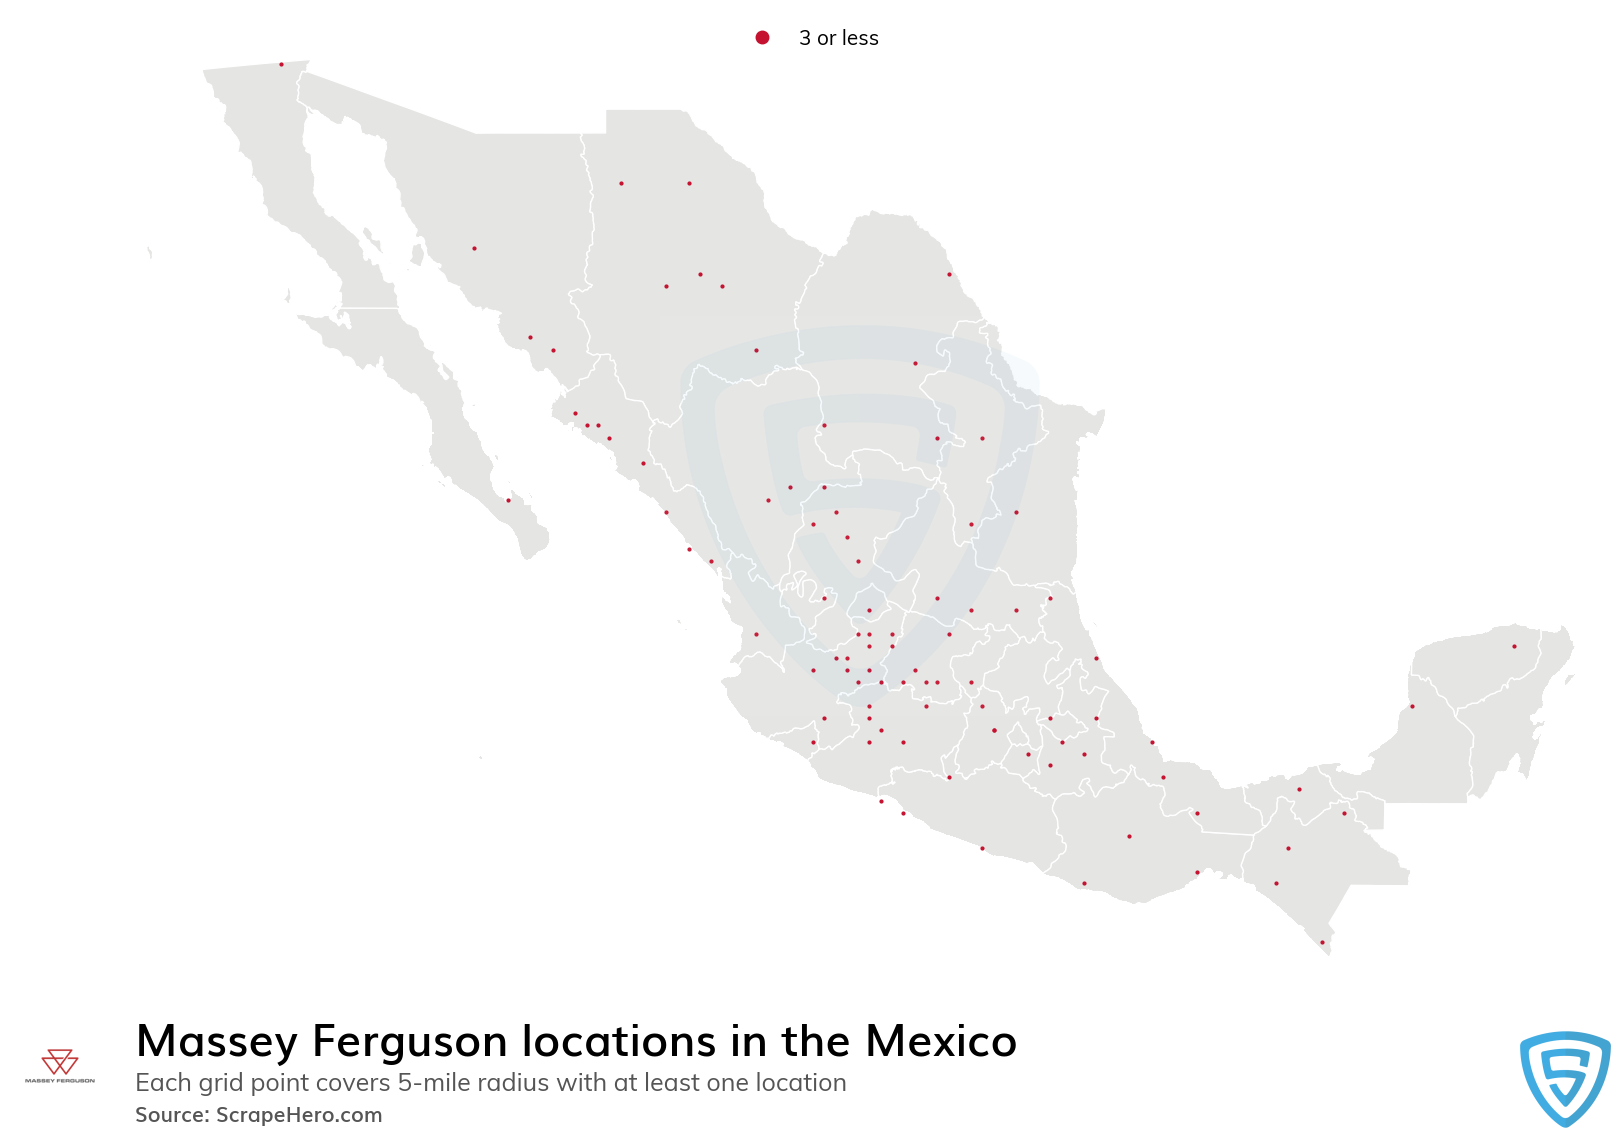 Massey Ferguson locations